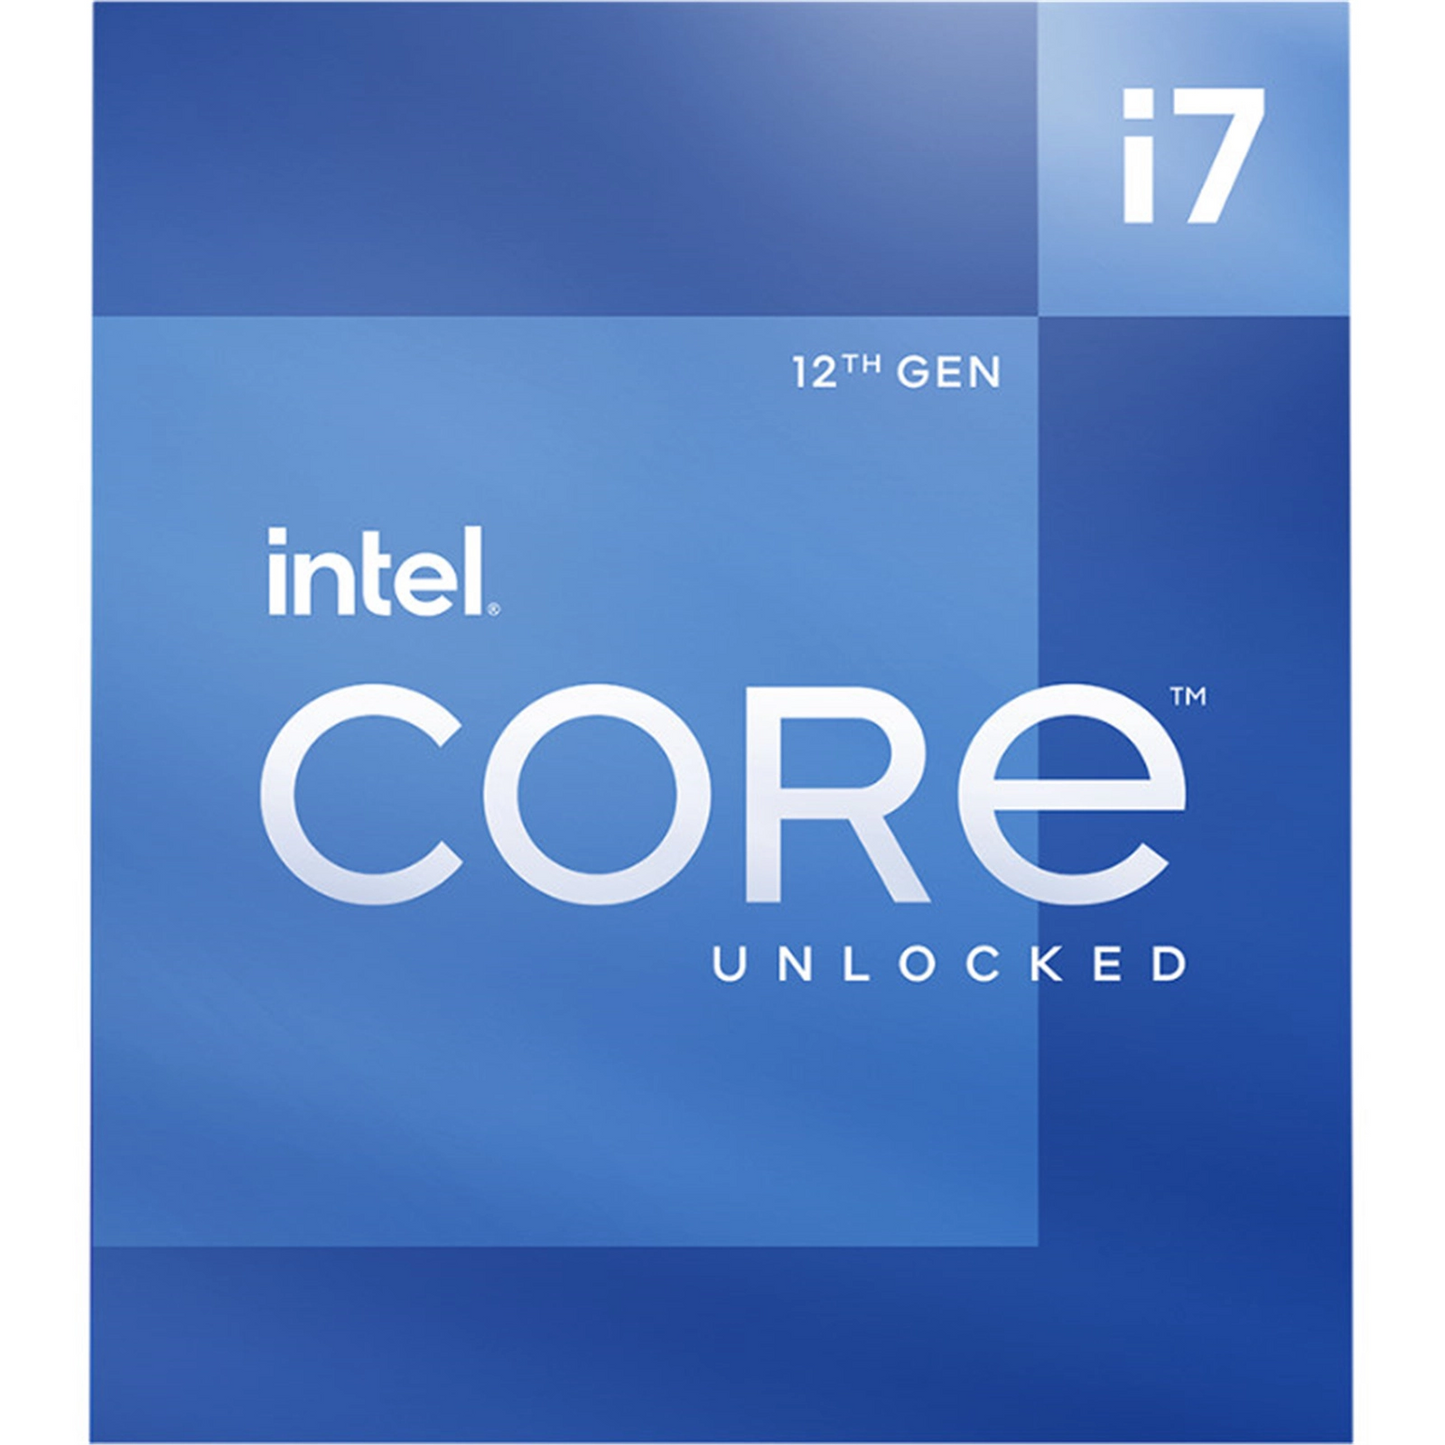 Intel Core i7 12700KF CPU